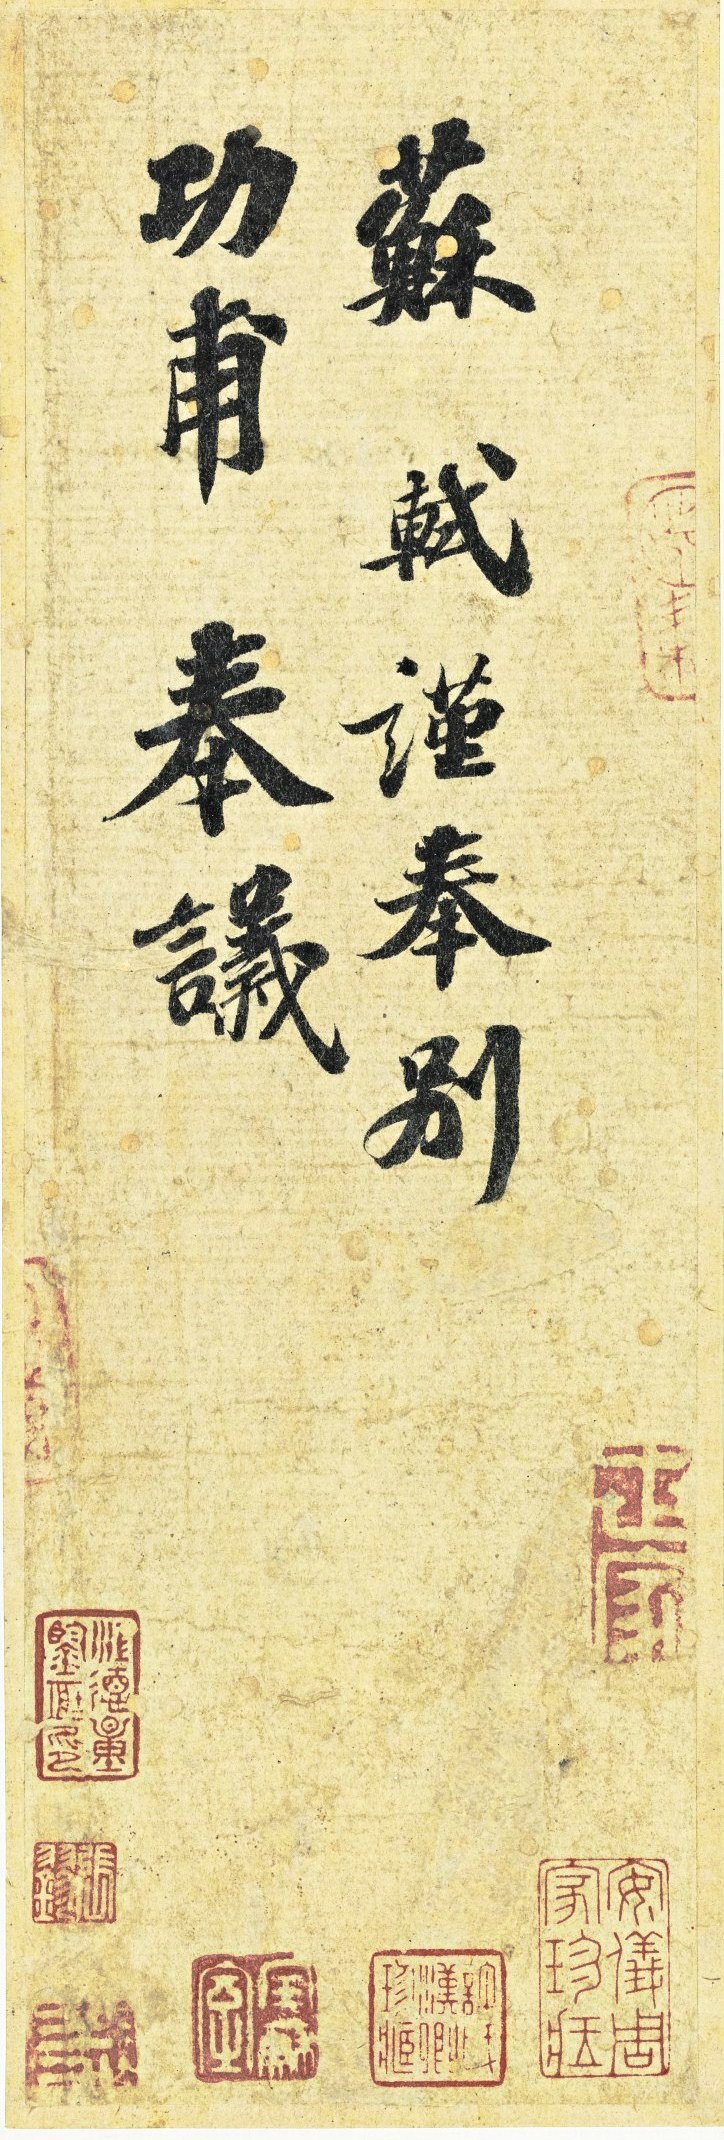 Gong-Fu-Tie-Calligraphy